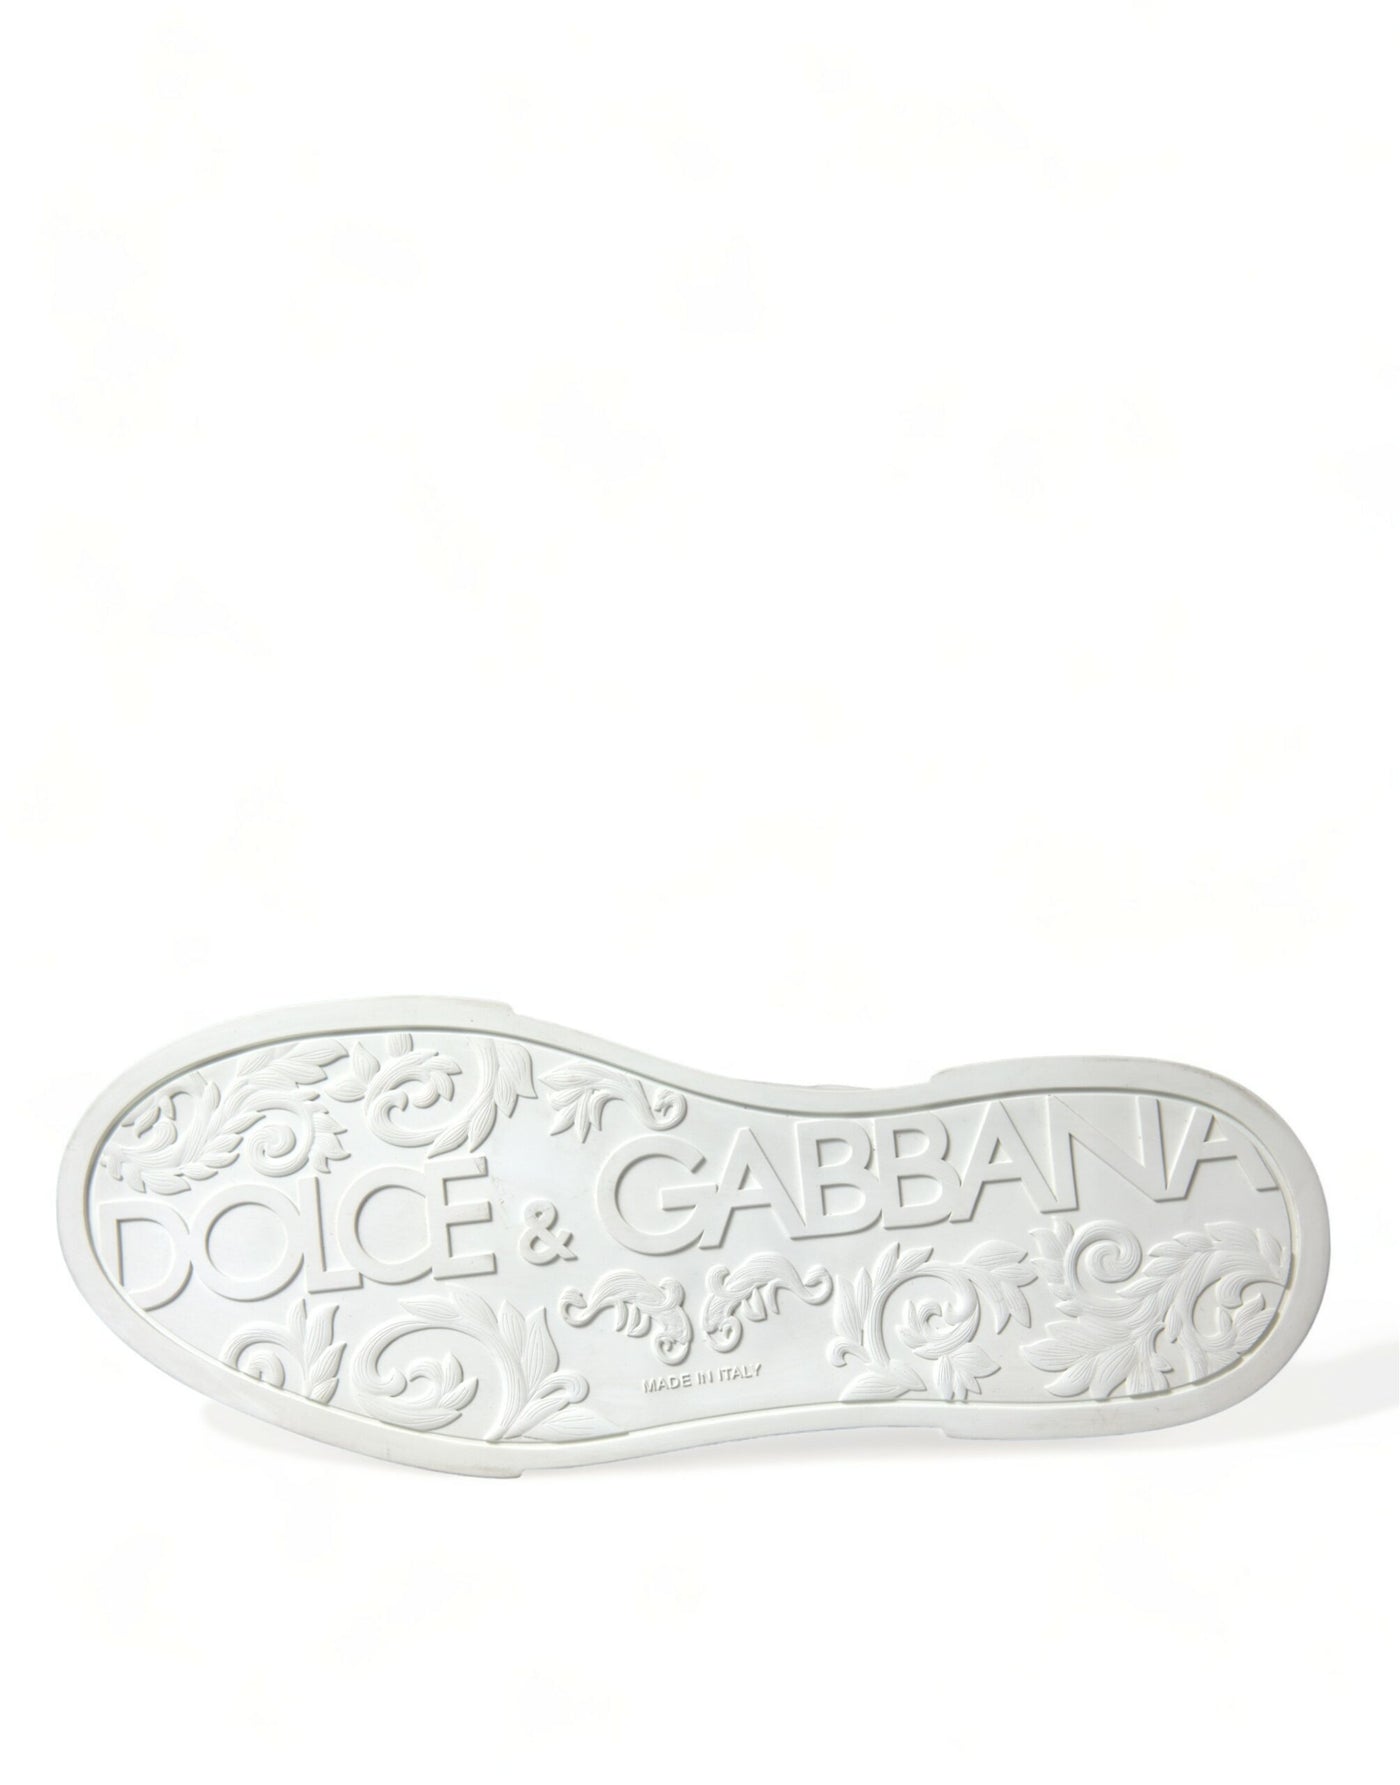 Dolce & Gabbana White Black Portofino Patch Men Sneakers Shoes